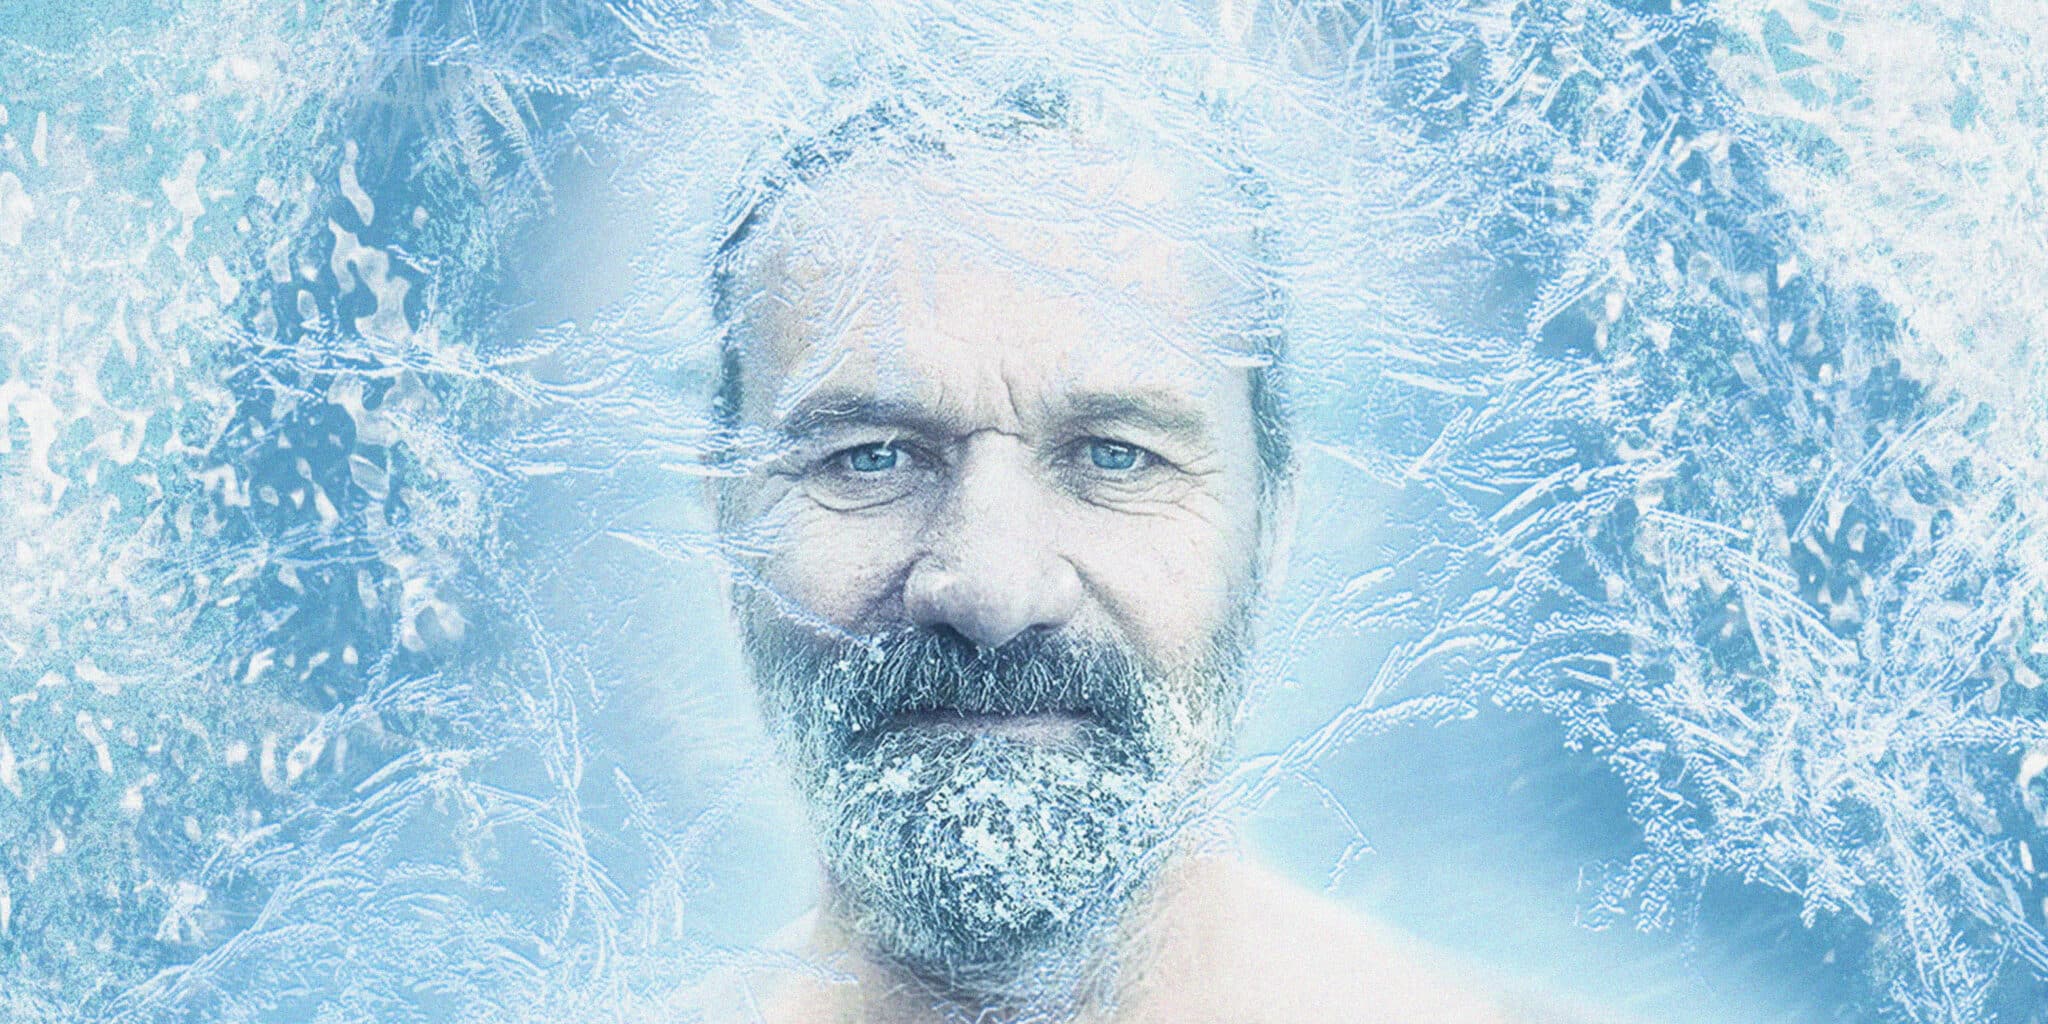 The Iceman (Wim Hof)